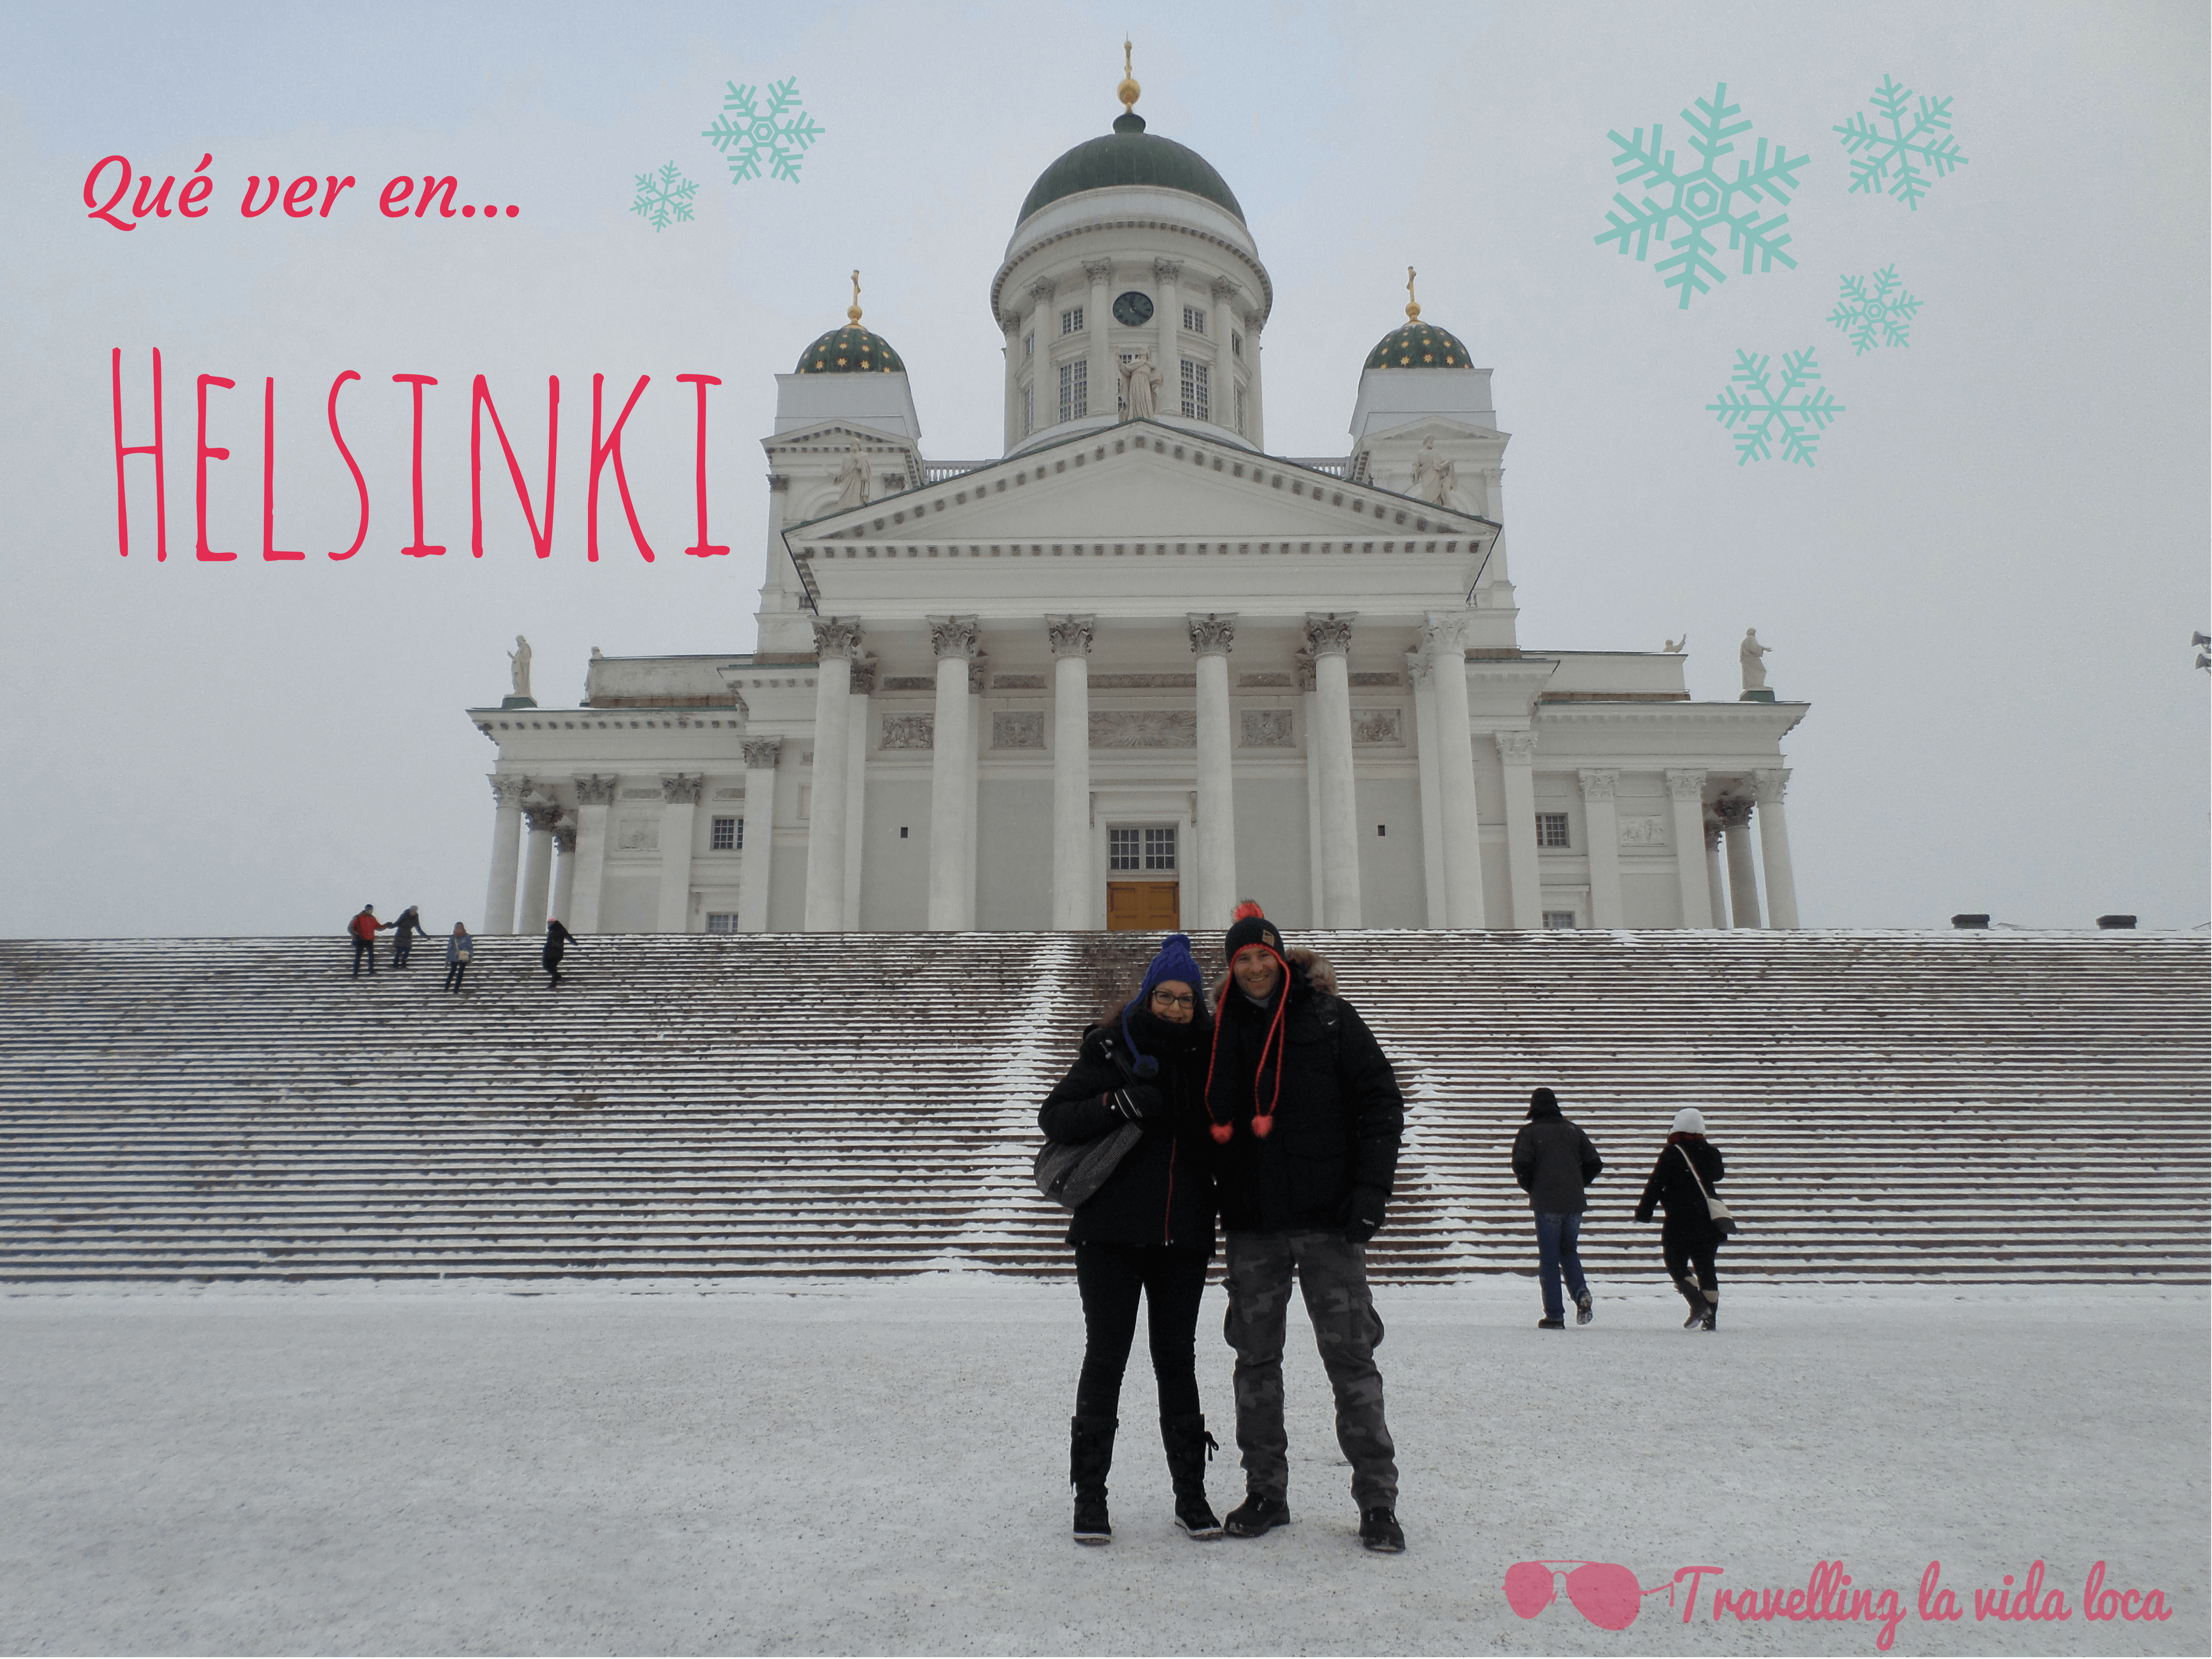 Qué ver en Helsinki